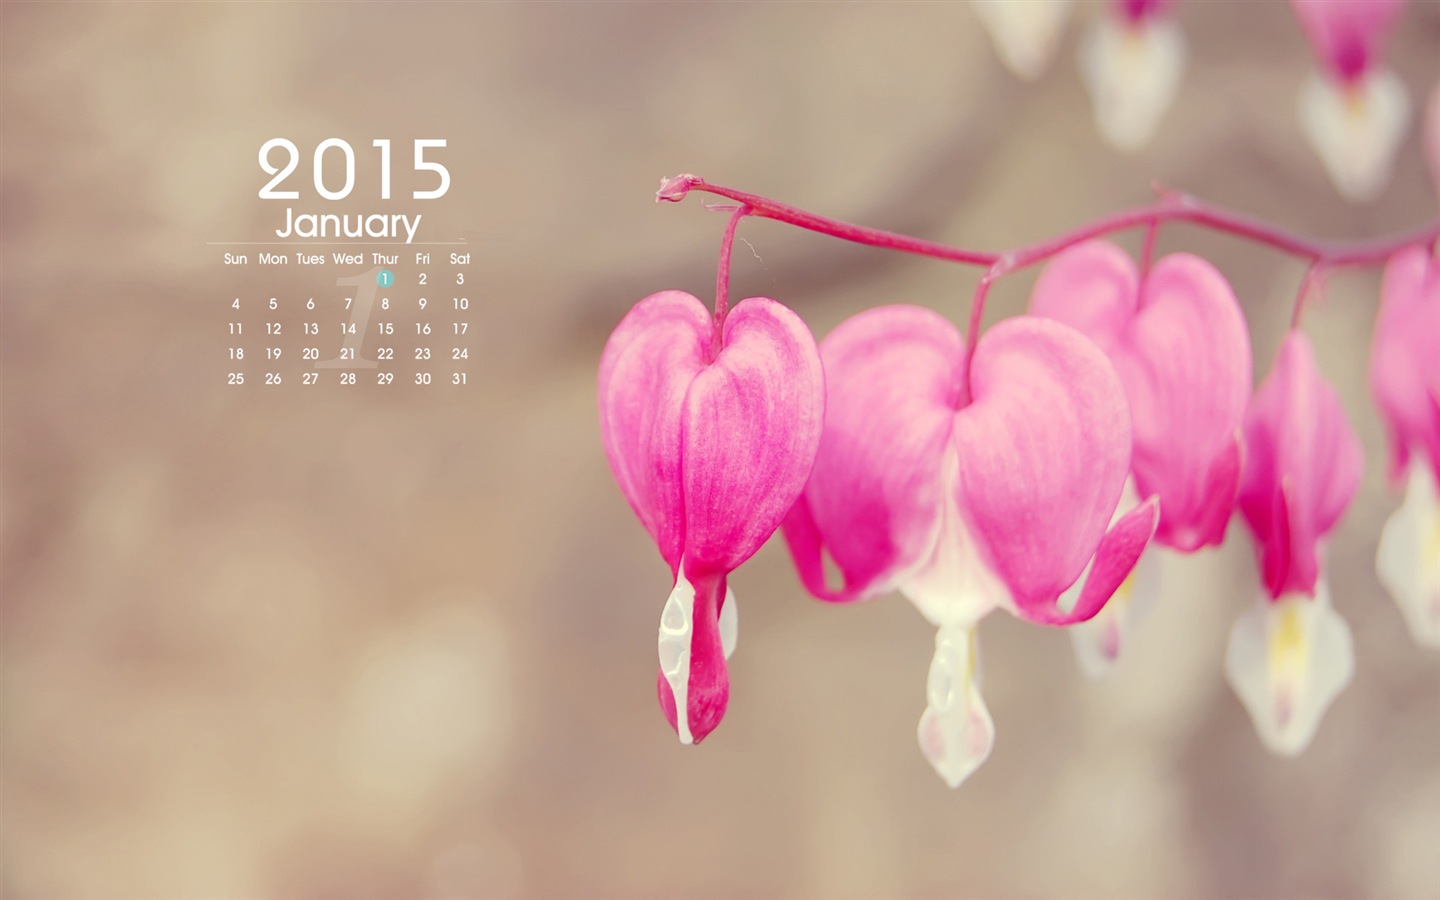 January 2015 calendar wallpaper (1) #9 - 1440x900